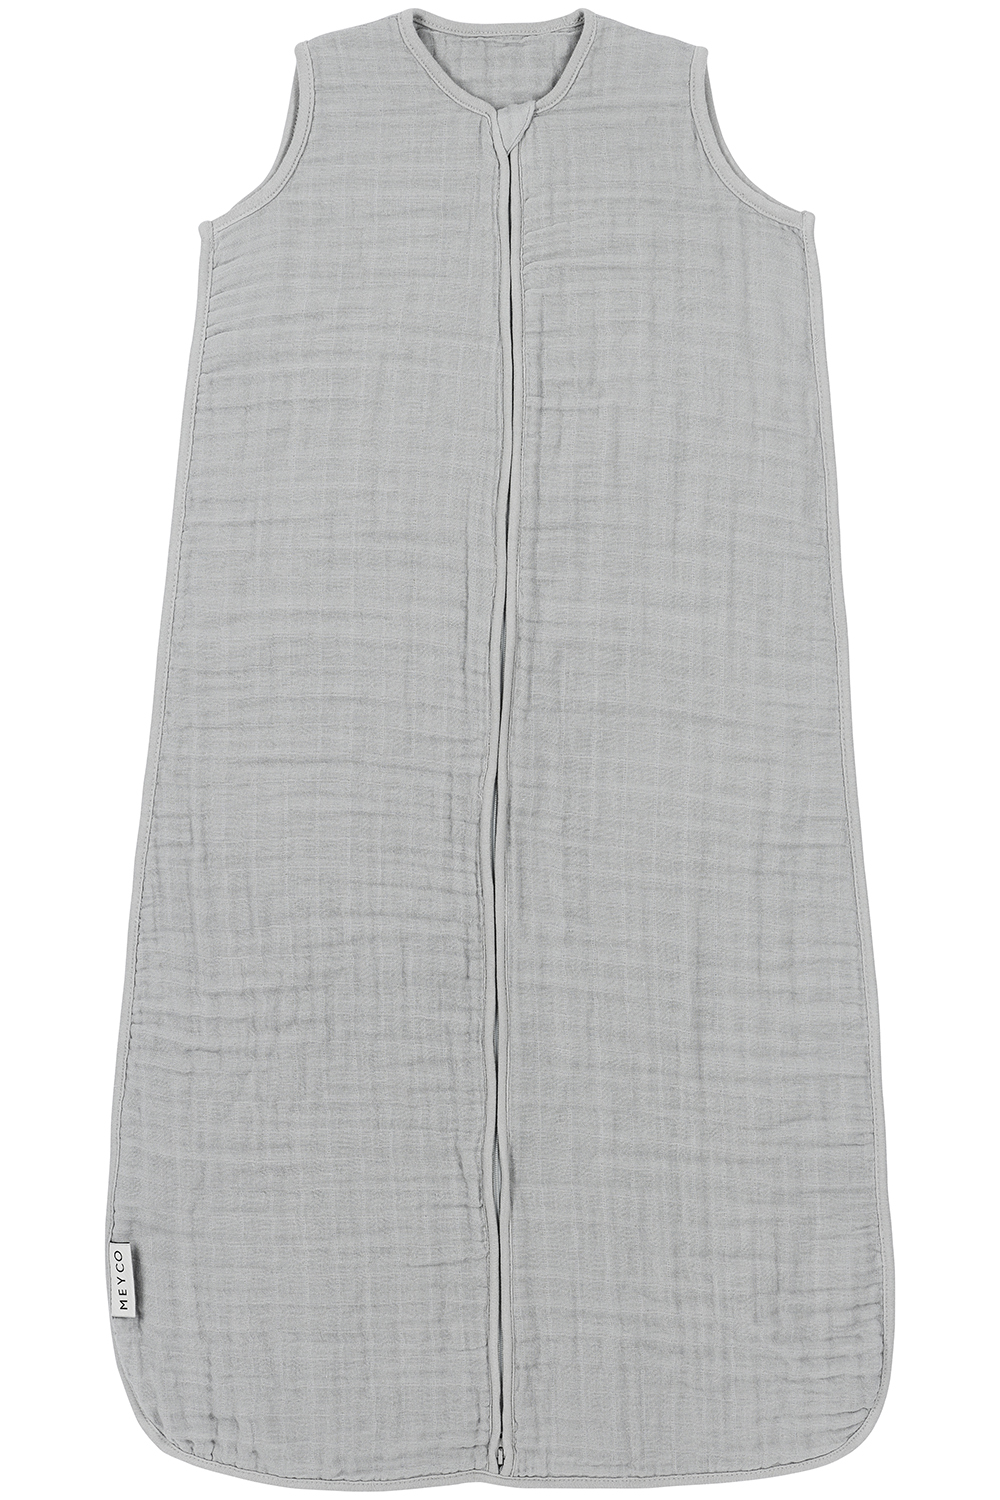 Sleepingbag muslin Uni - light grey - 110cm